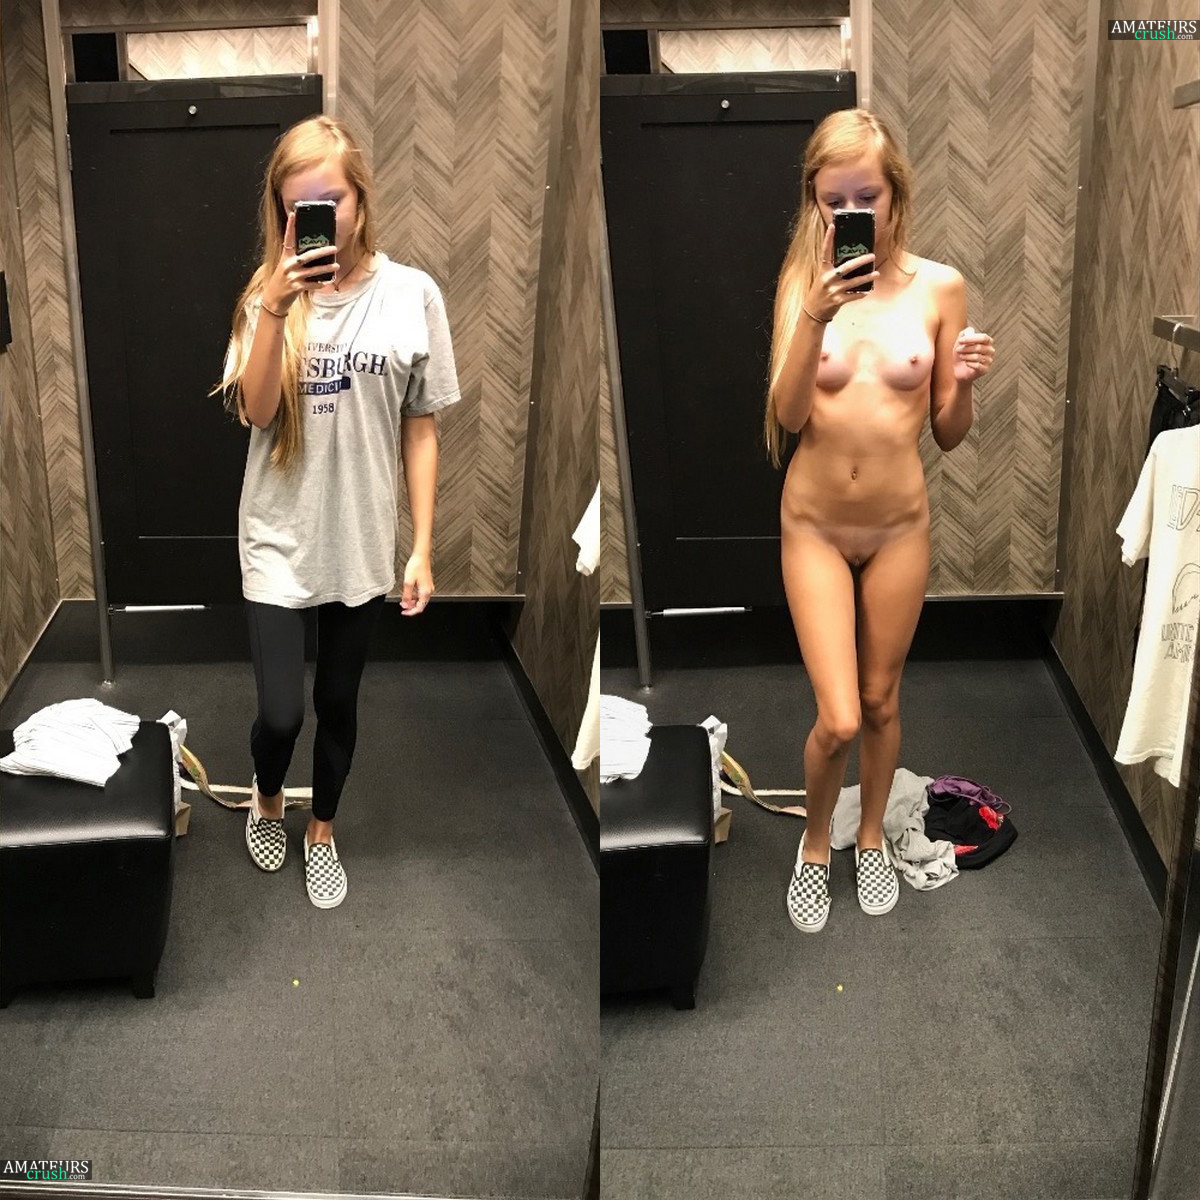 Locker Room Naked Amateur Asians - Teen Selfies - Real 18+ Amateur Nudes - AmateursCrush.com